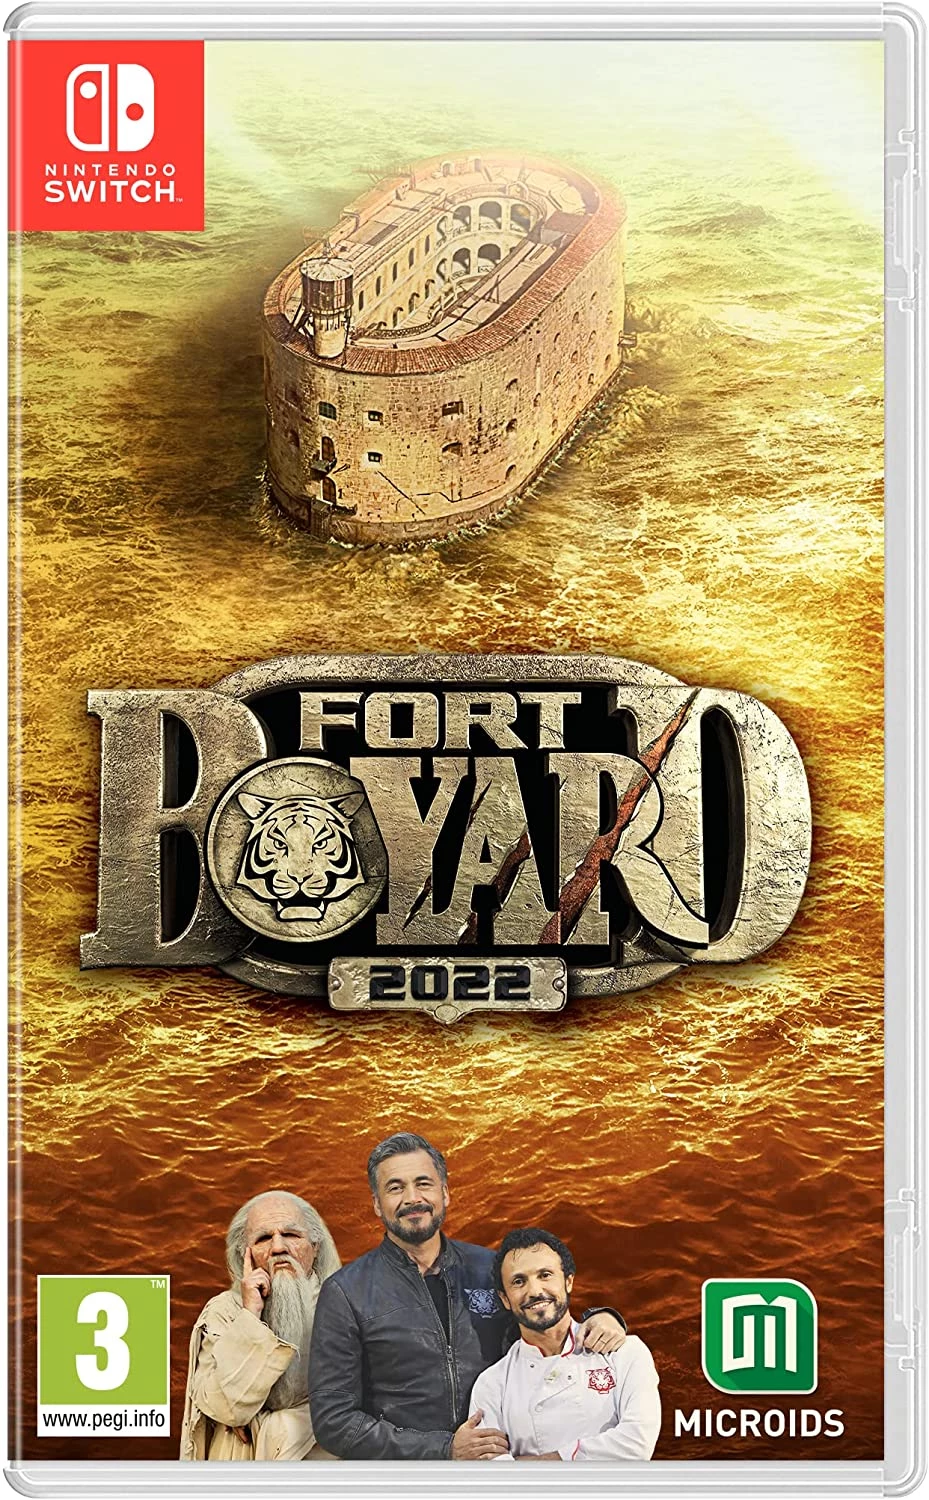 Fort Boyard 2022 (Switch), Microids